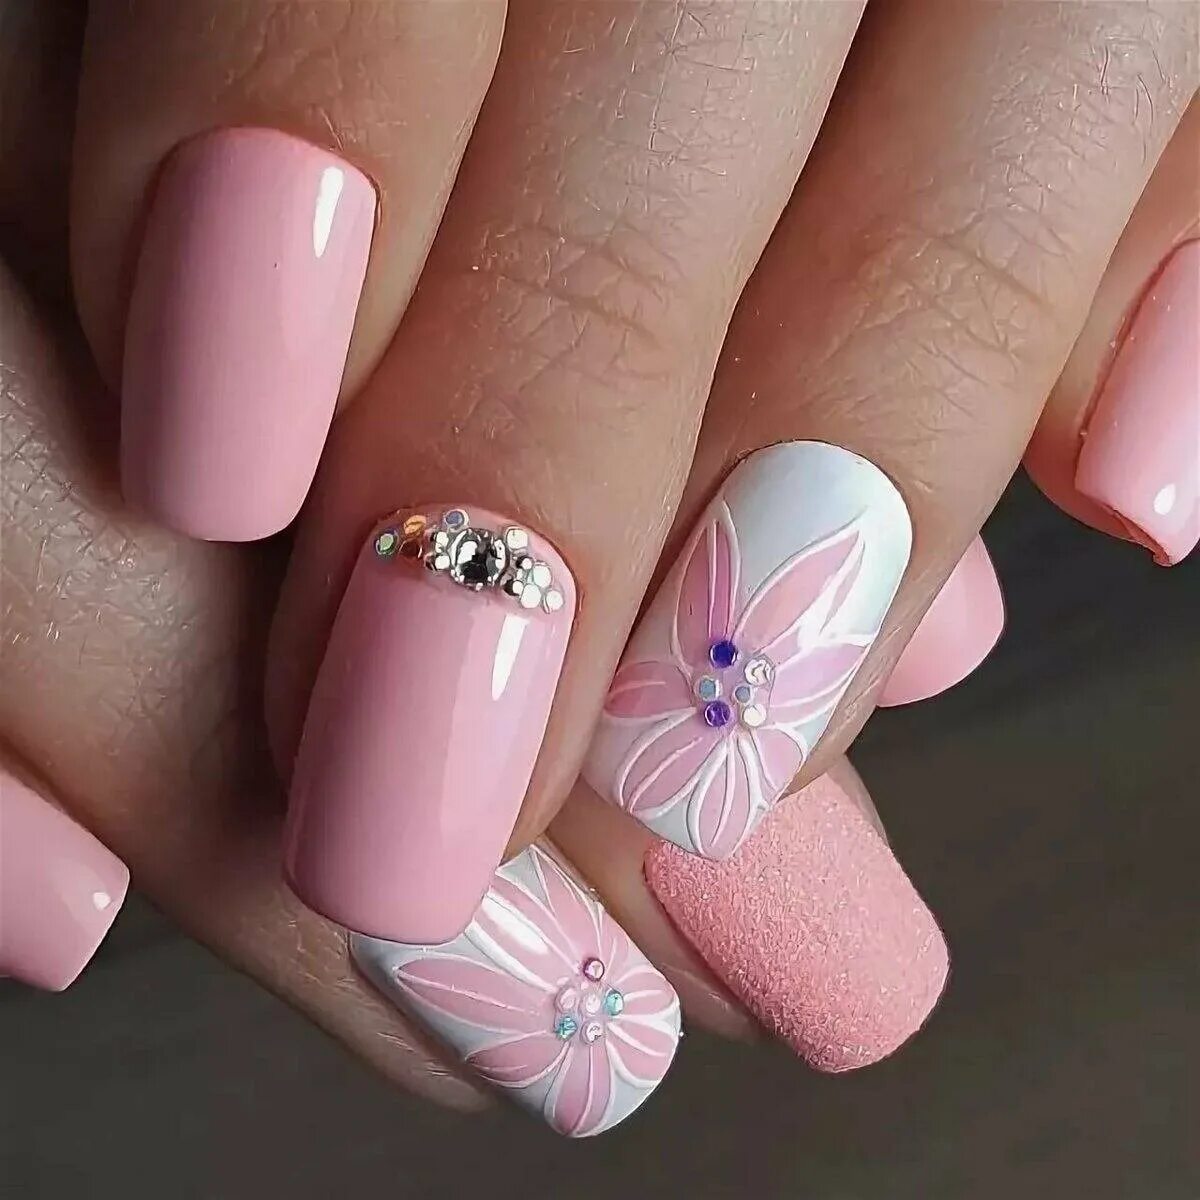 Шикарный весенний маникюр. Розовый маникюр. Р̸о̸з̸о̸в̸ы̸й̸ м̸а̸н̸и̸к̸. Красивые ногти. Красивые ногти на лето.